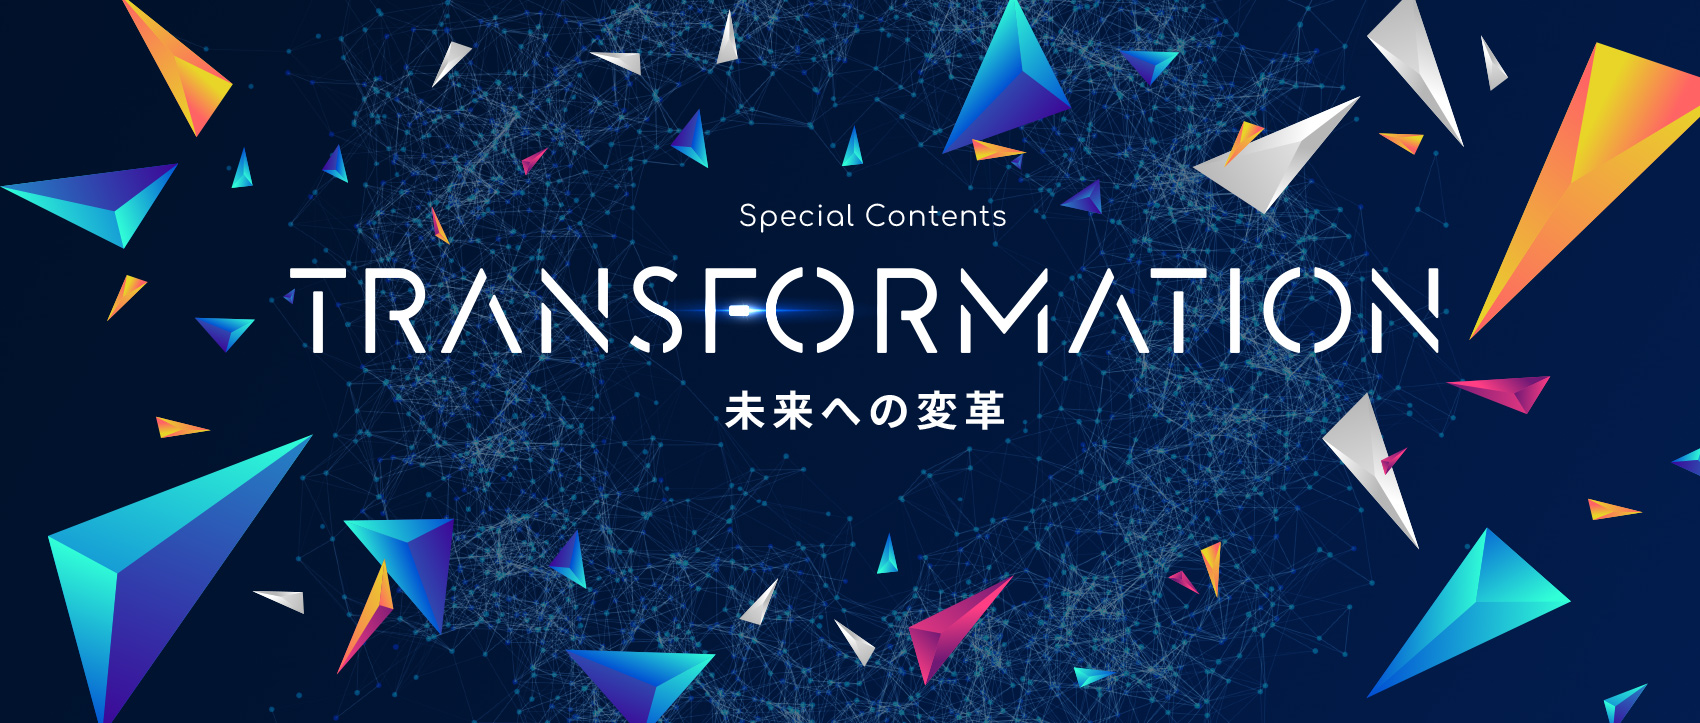 TRANSFORMATION 〜未来への変革〜